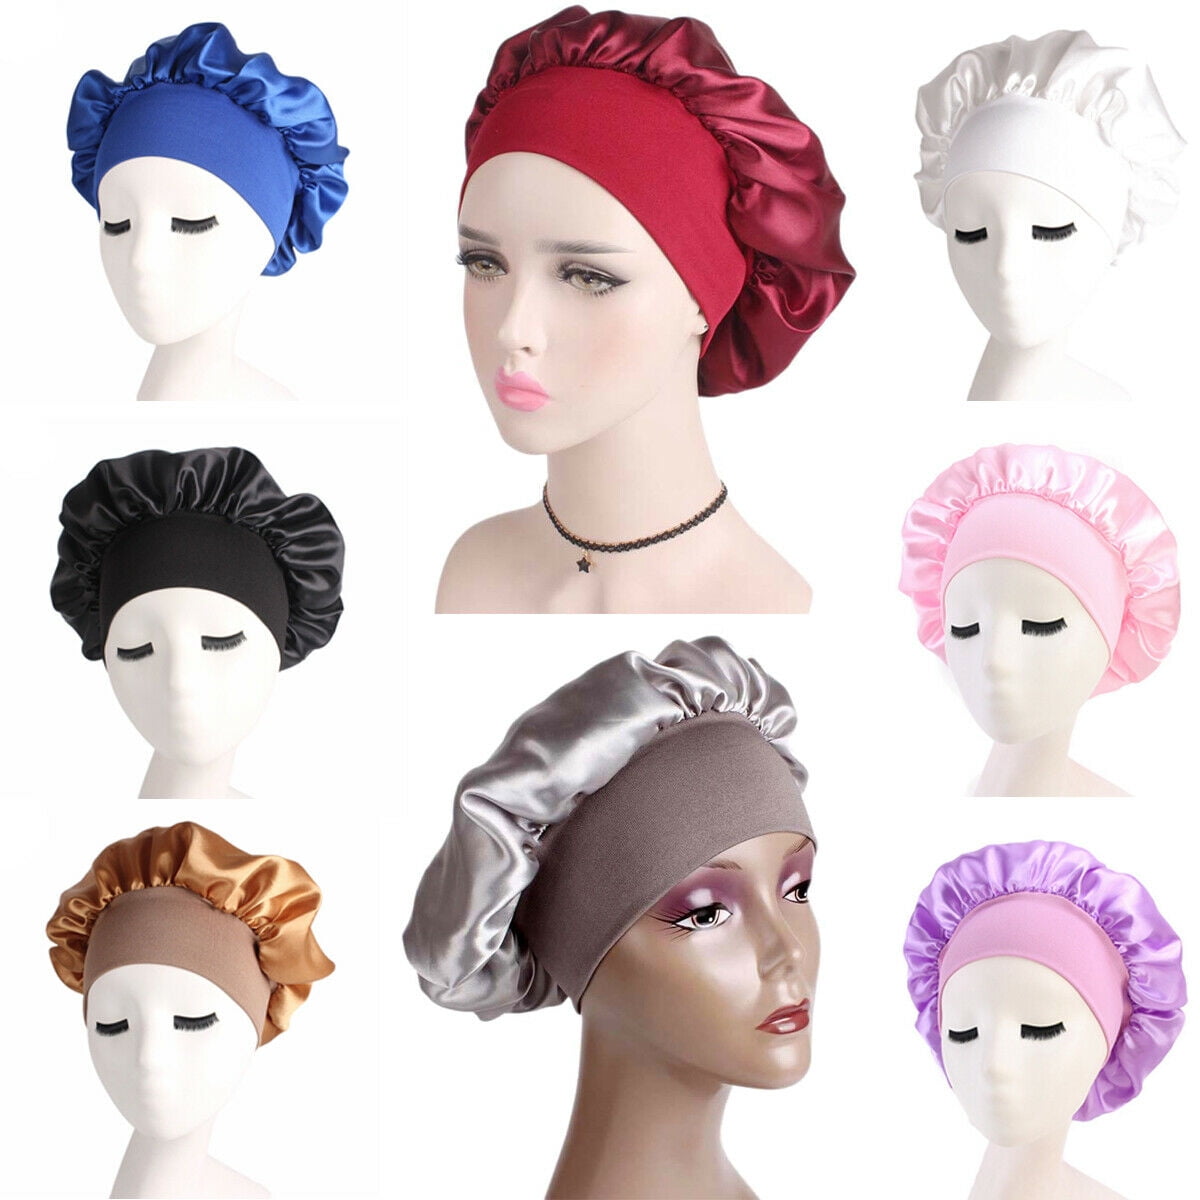 Hair, Designer Bonnets And Headbands